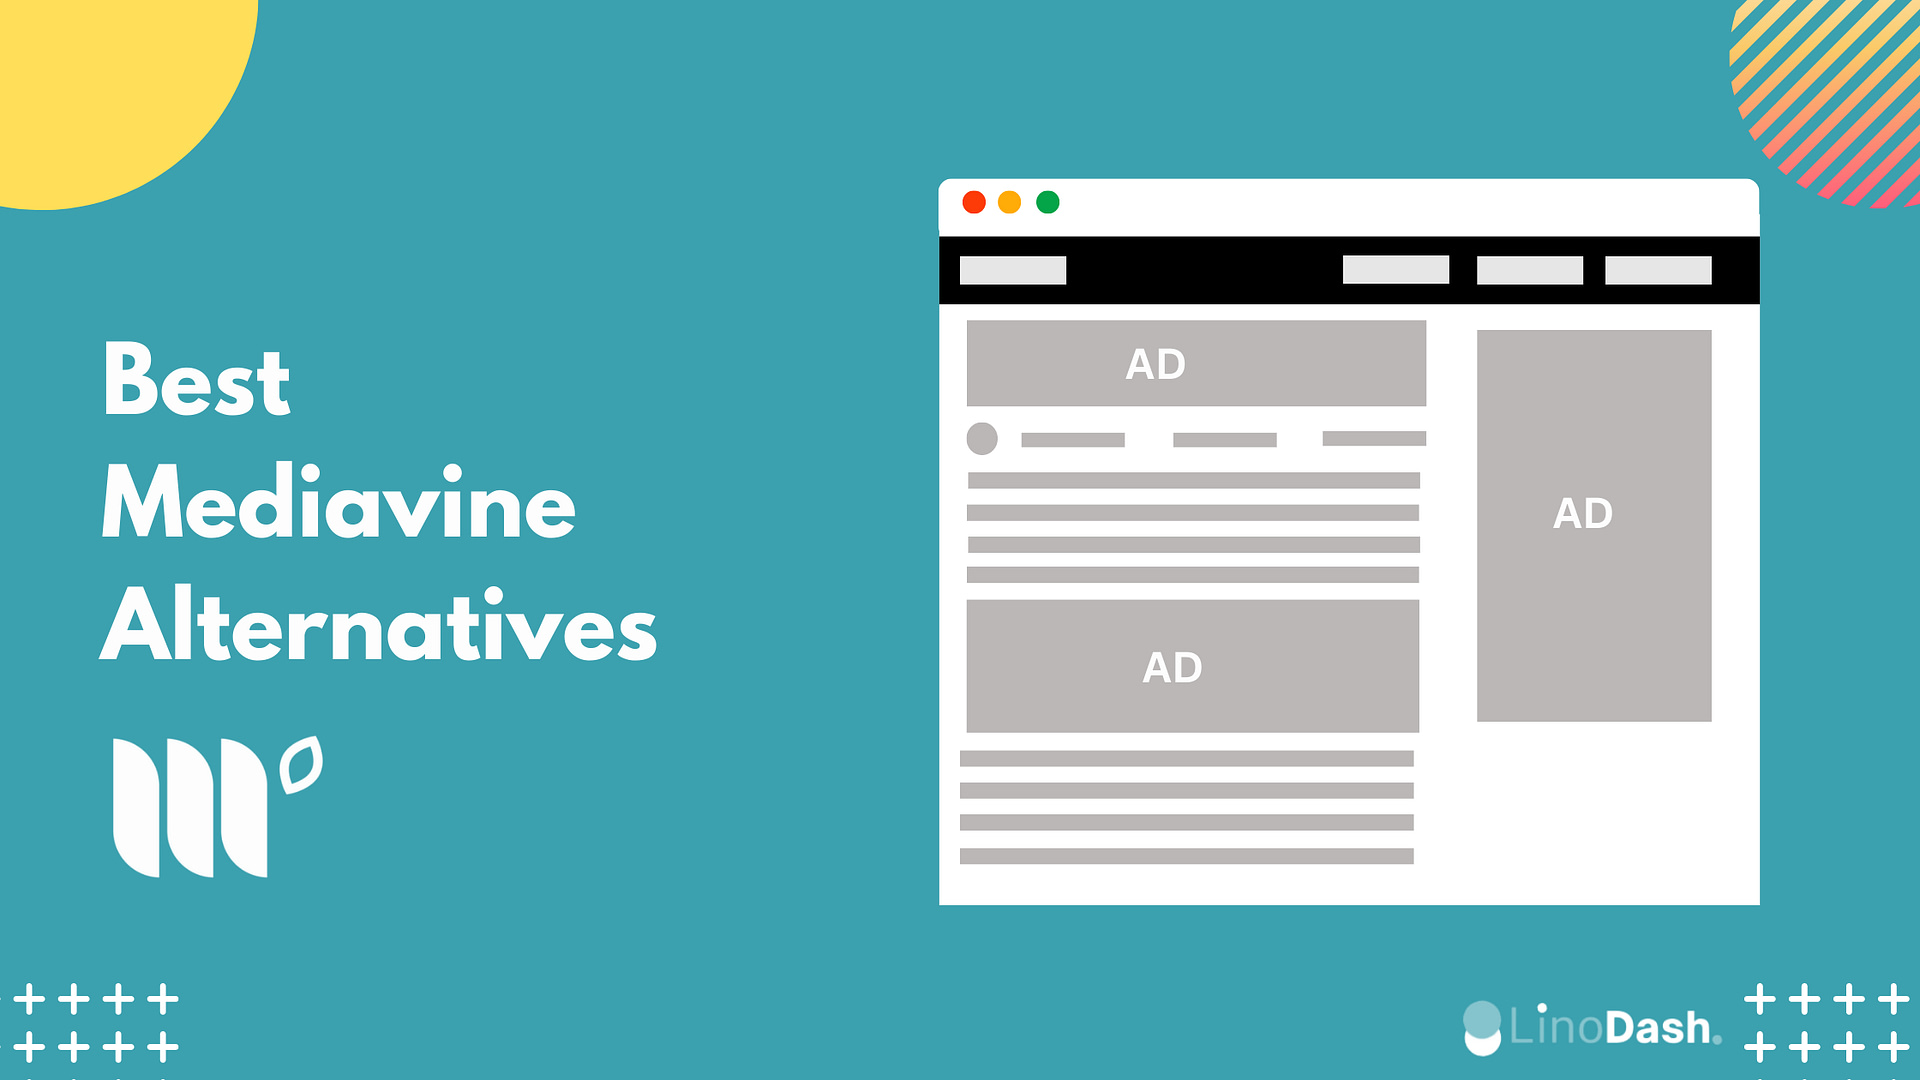 The best Mediavine alternatives to make money blogging via ads